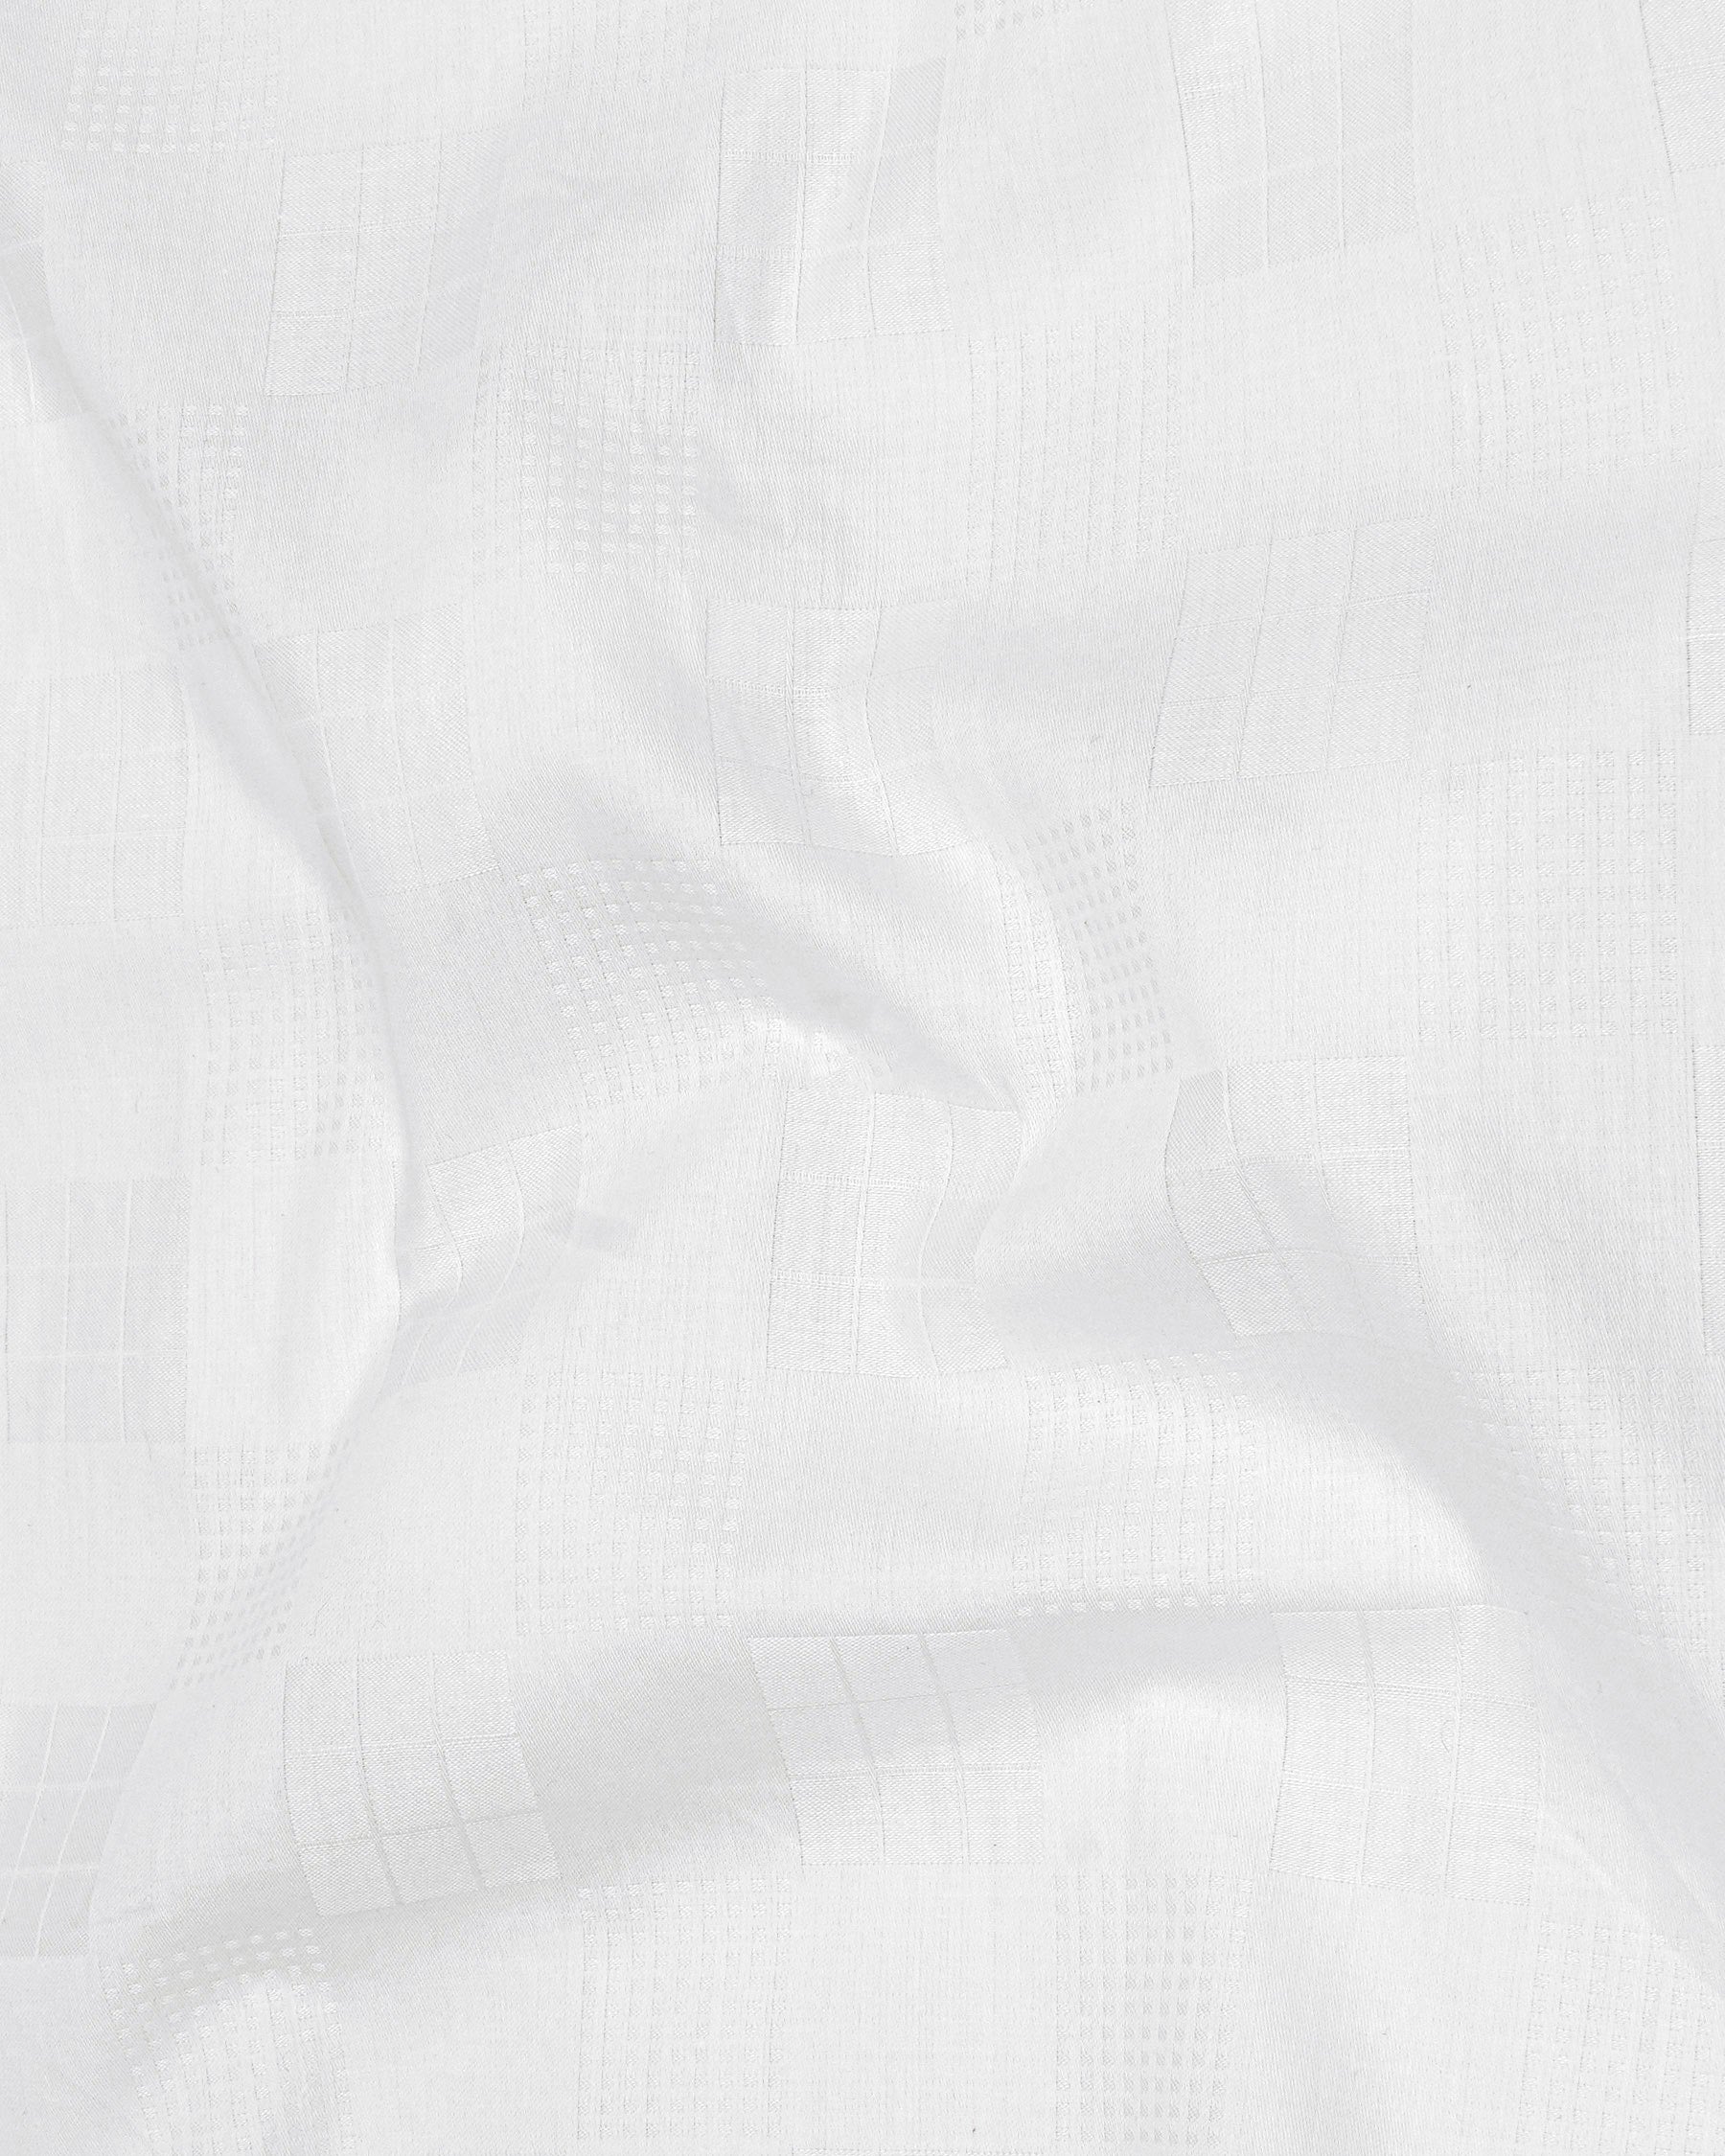 Bright White Jacquard Textured Premium Cotton Shirt 7751-CA-38, 7751-CA-H-38, 7751-CA-39,7751-CA-H-39, 7751-CA-40, 7751-CA-H-40, 7751-CA-42, 7751-CA-H-42, 7751-CA-44, 7751-CA-H-44, 7751-CA-46, 7751-CA-H-46, 7751-CA-48, 7751-CA-H-48, 7751-CA-50, 7751-CA-H-50, 7751-CA-52, 7751-CA-H-52